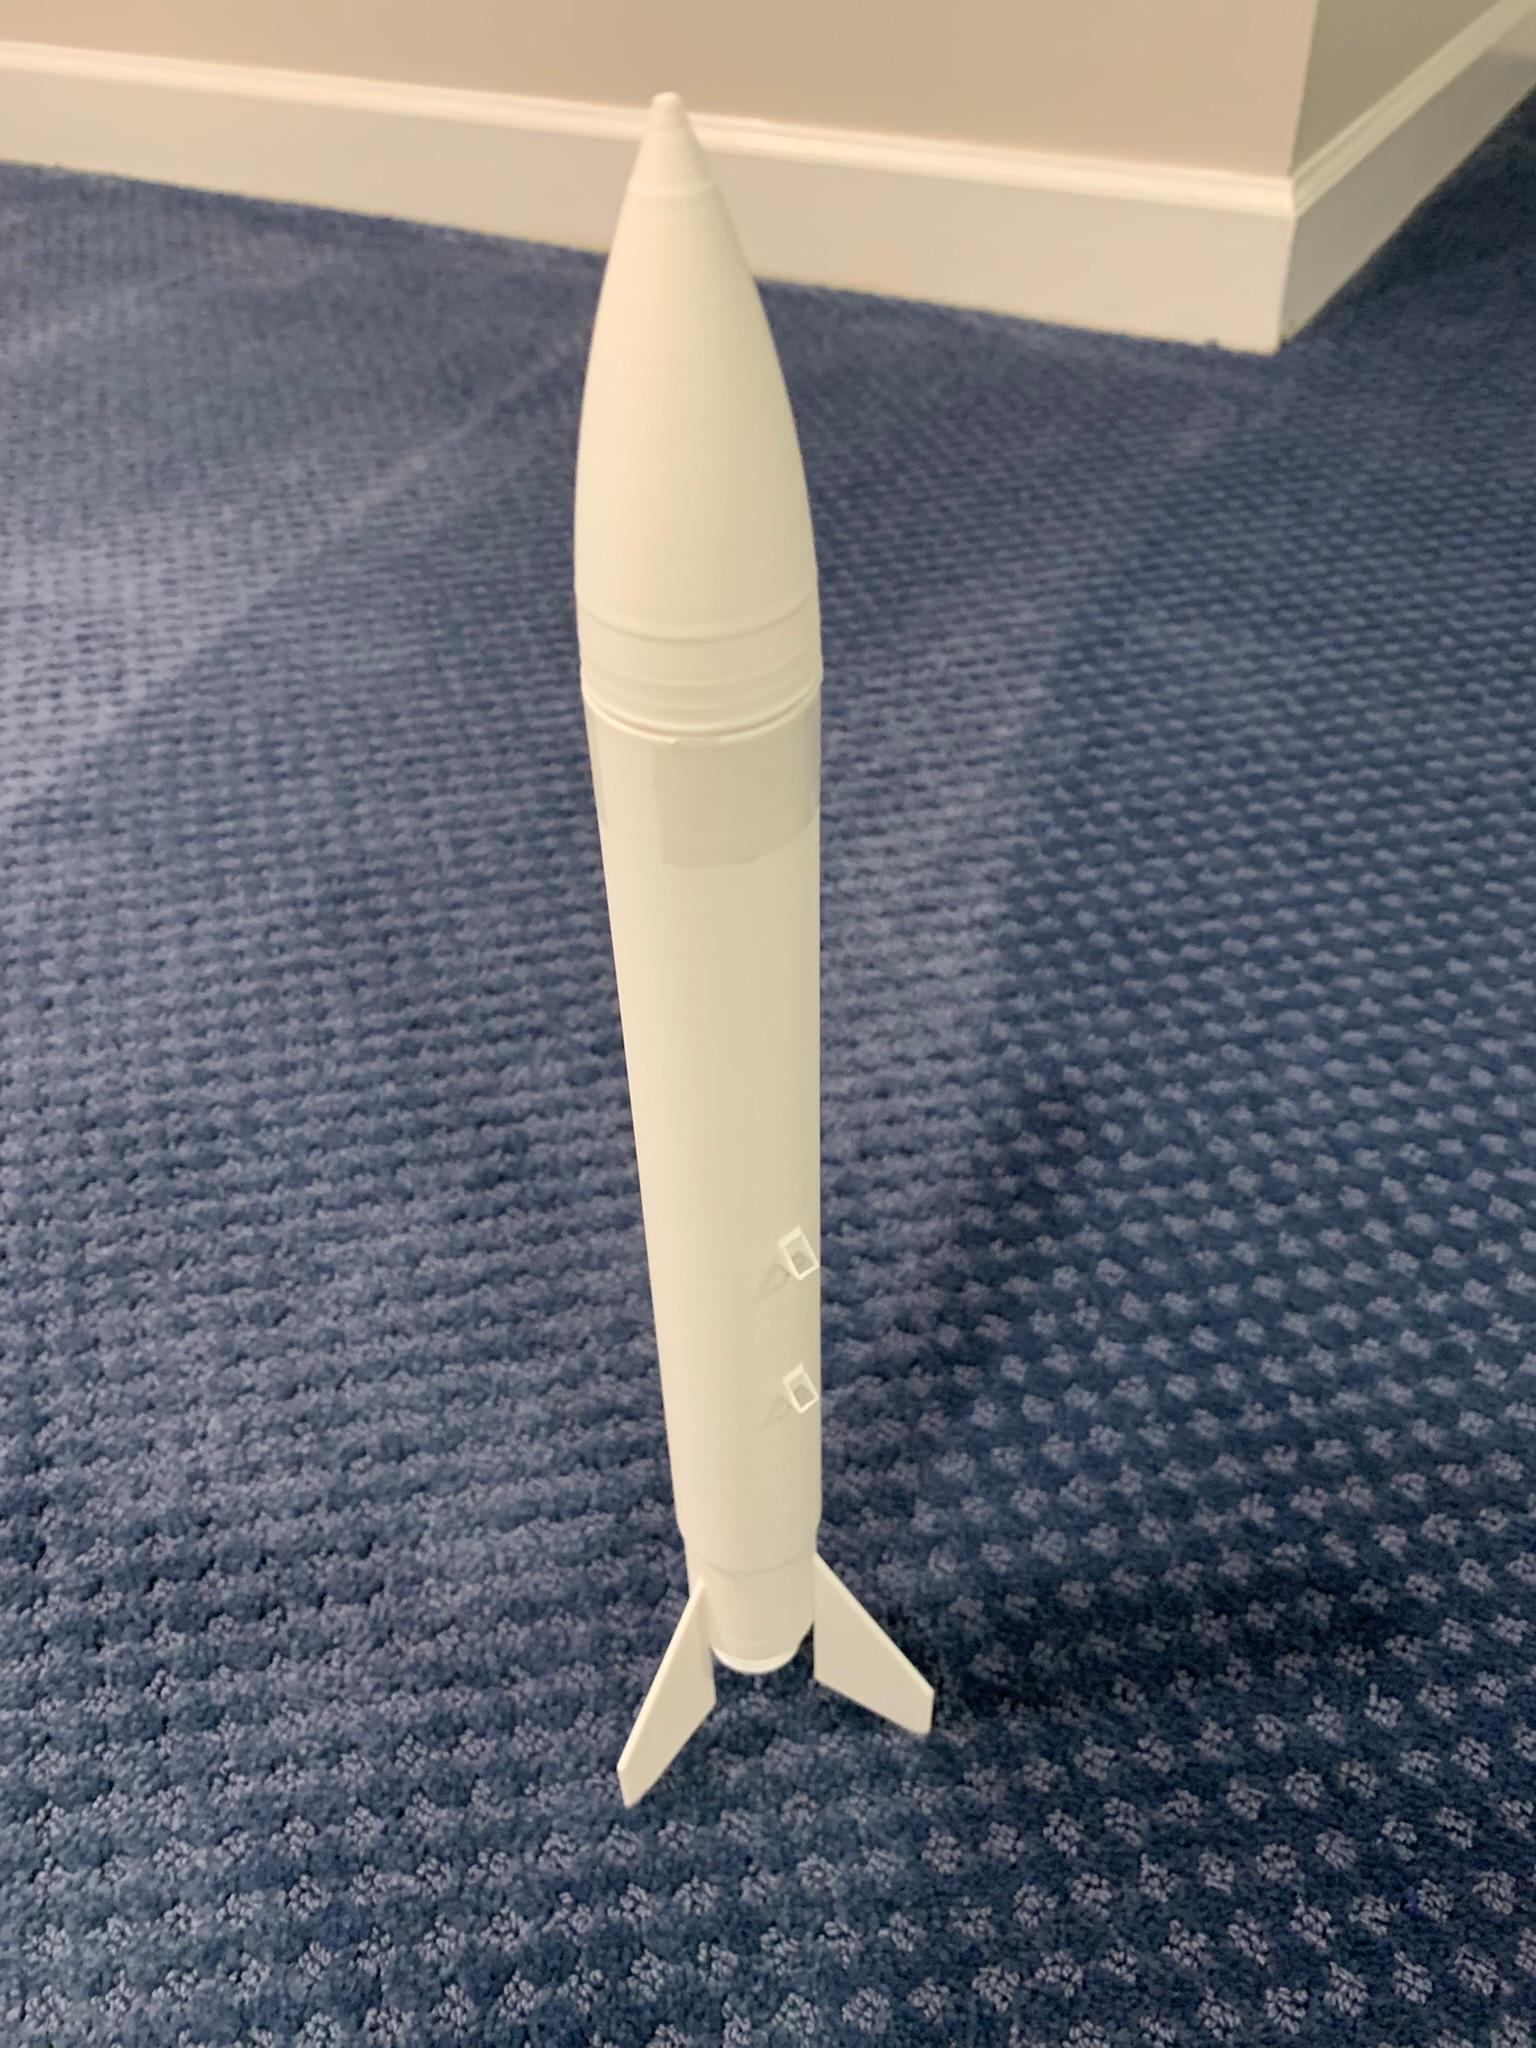 Fully Functional Model Rocket 3d model